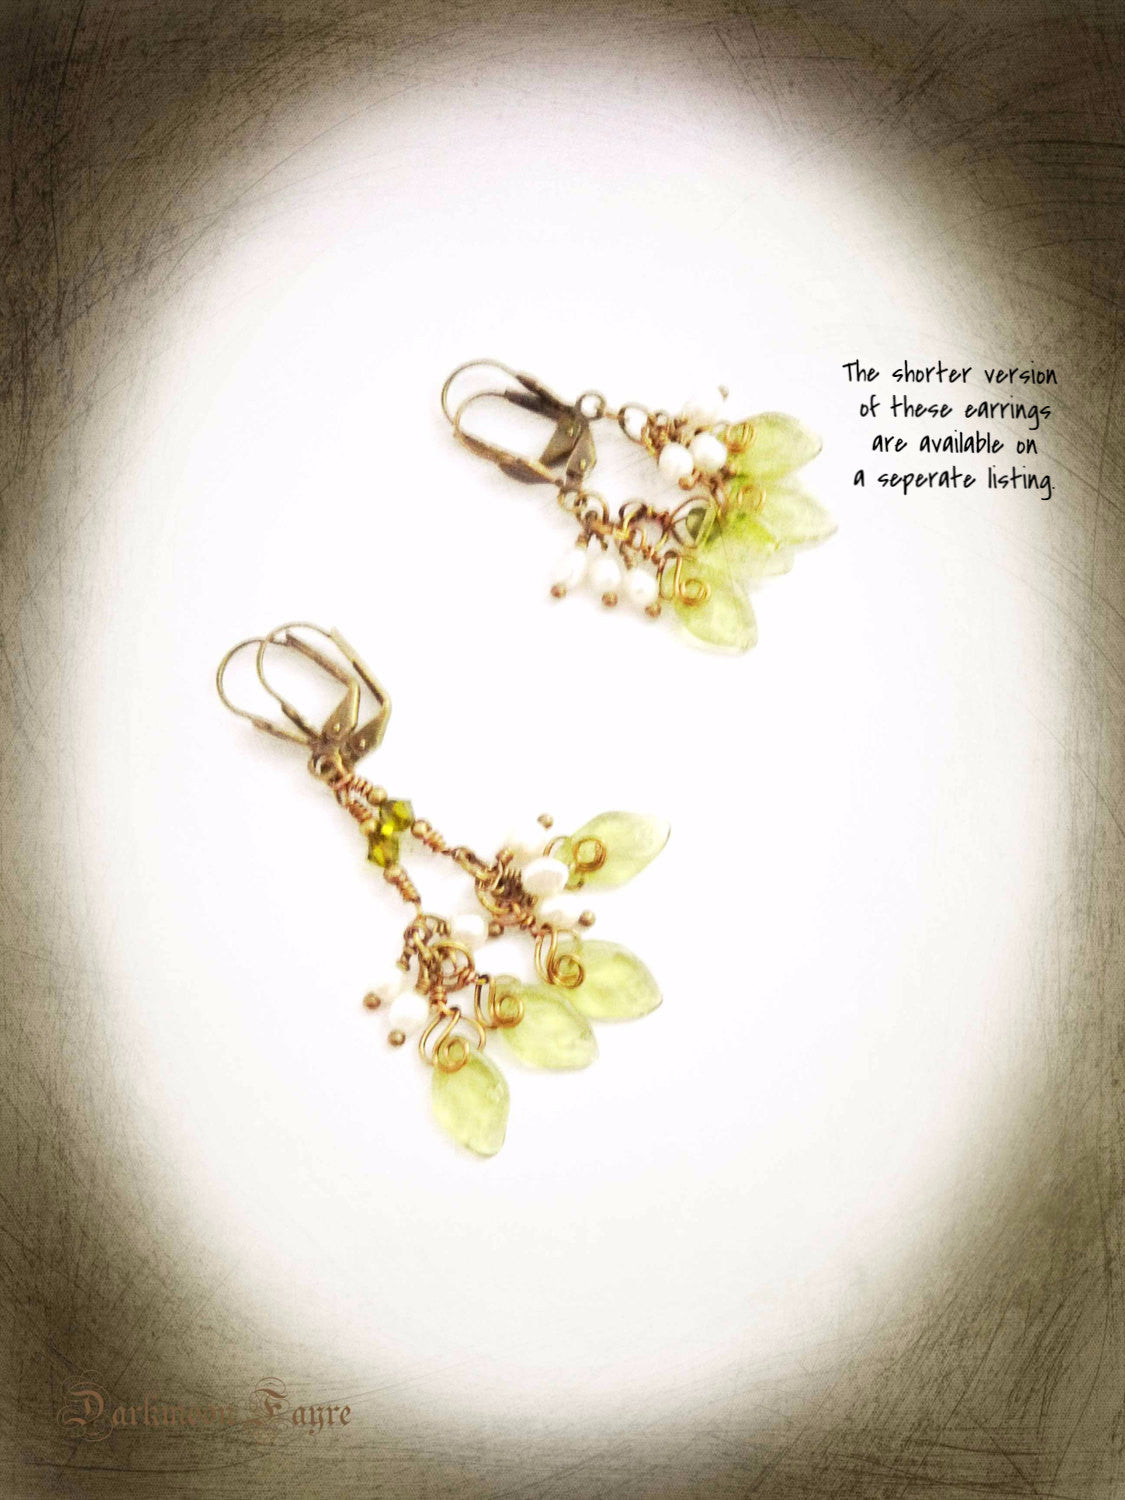 Mistletoe Earrings. Freshwater Pearl & Glass Leaves. Antiqued Bronze. Olive Swarovski Crystals - Darkmoon Fayre